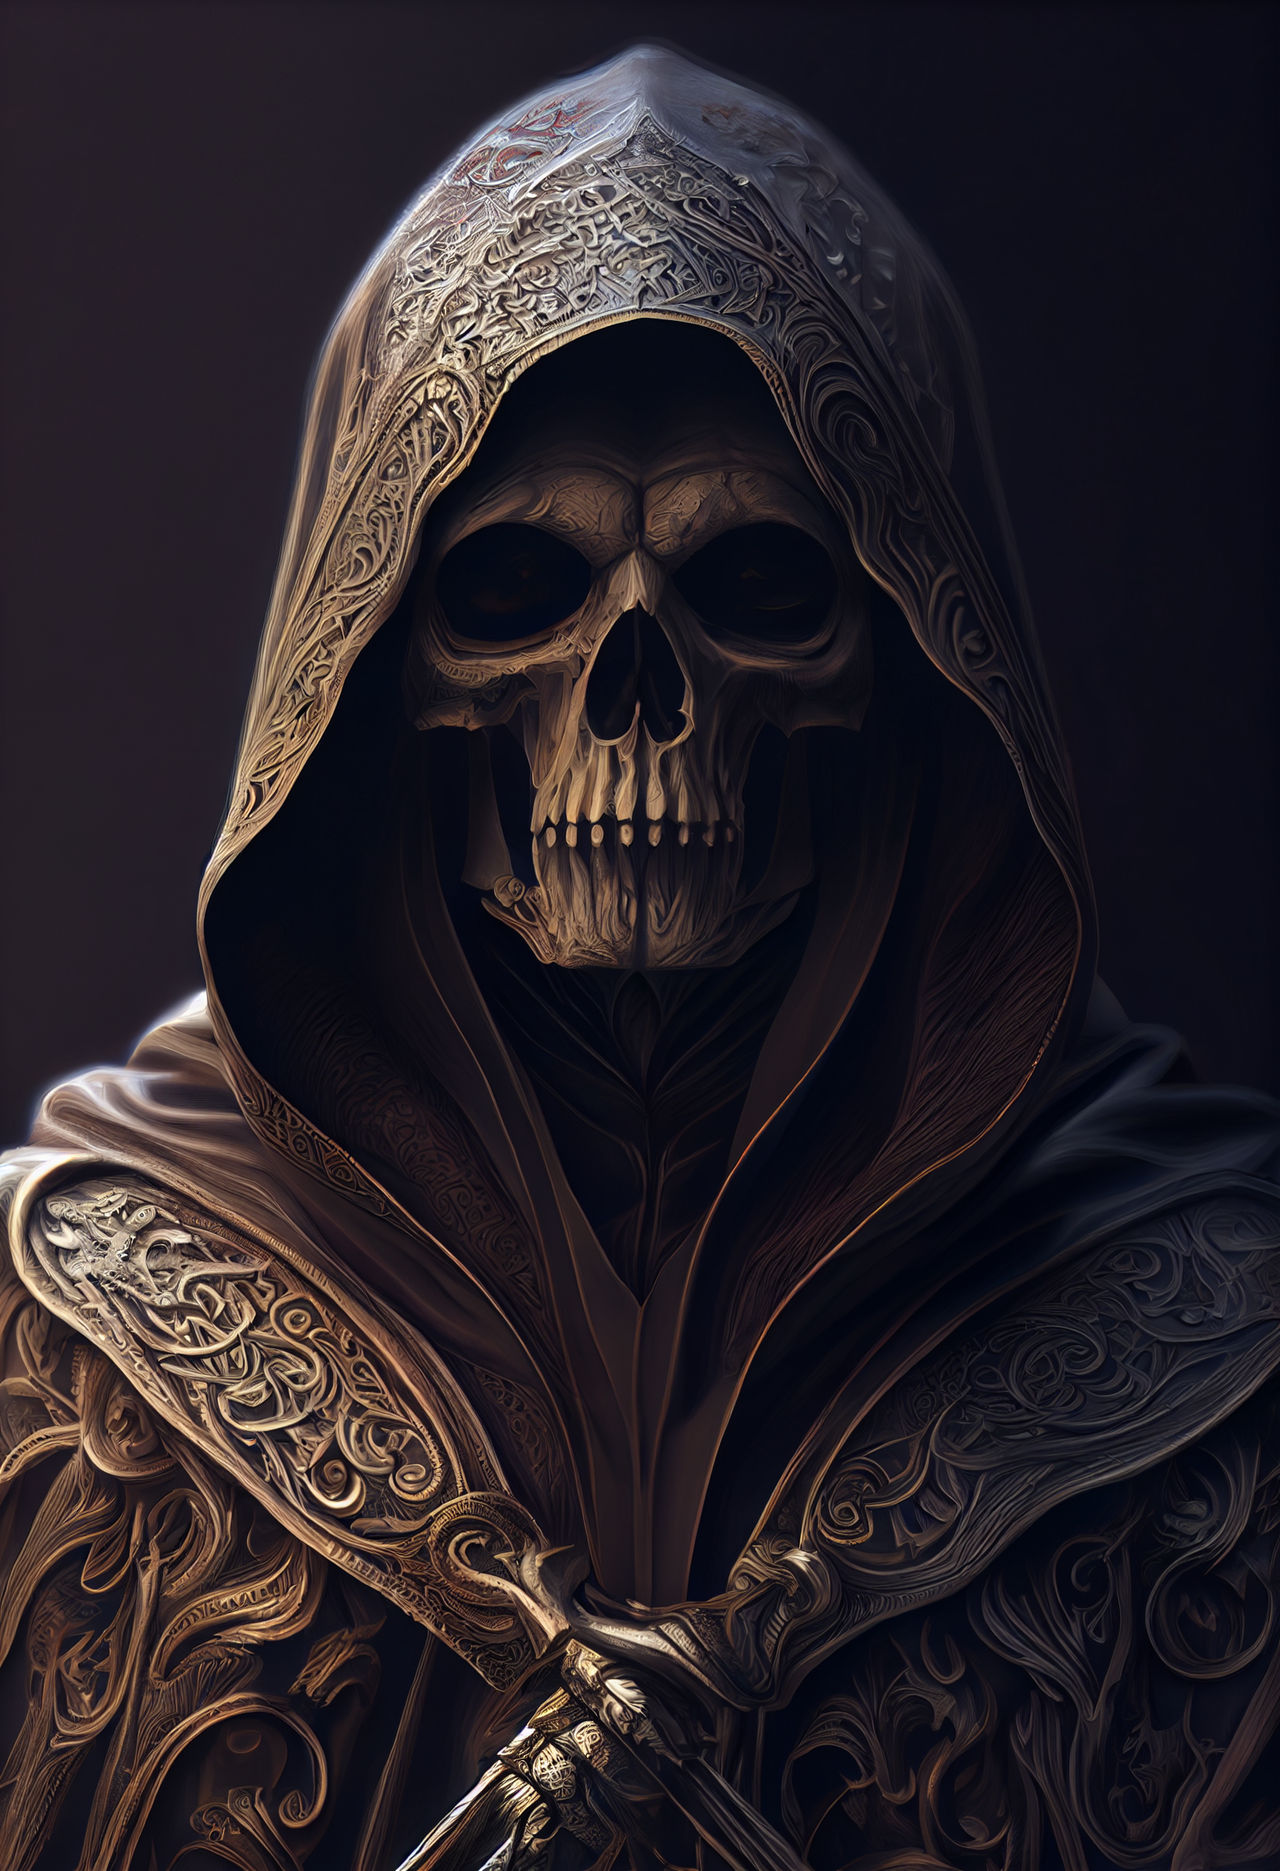 Portrait of the Grim Reaper by fckyouropinion on DeviantArt